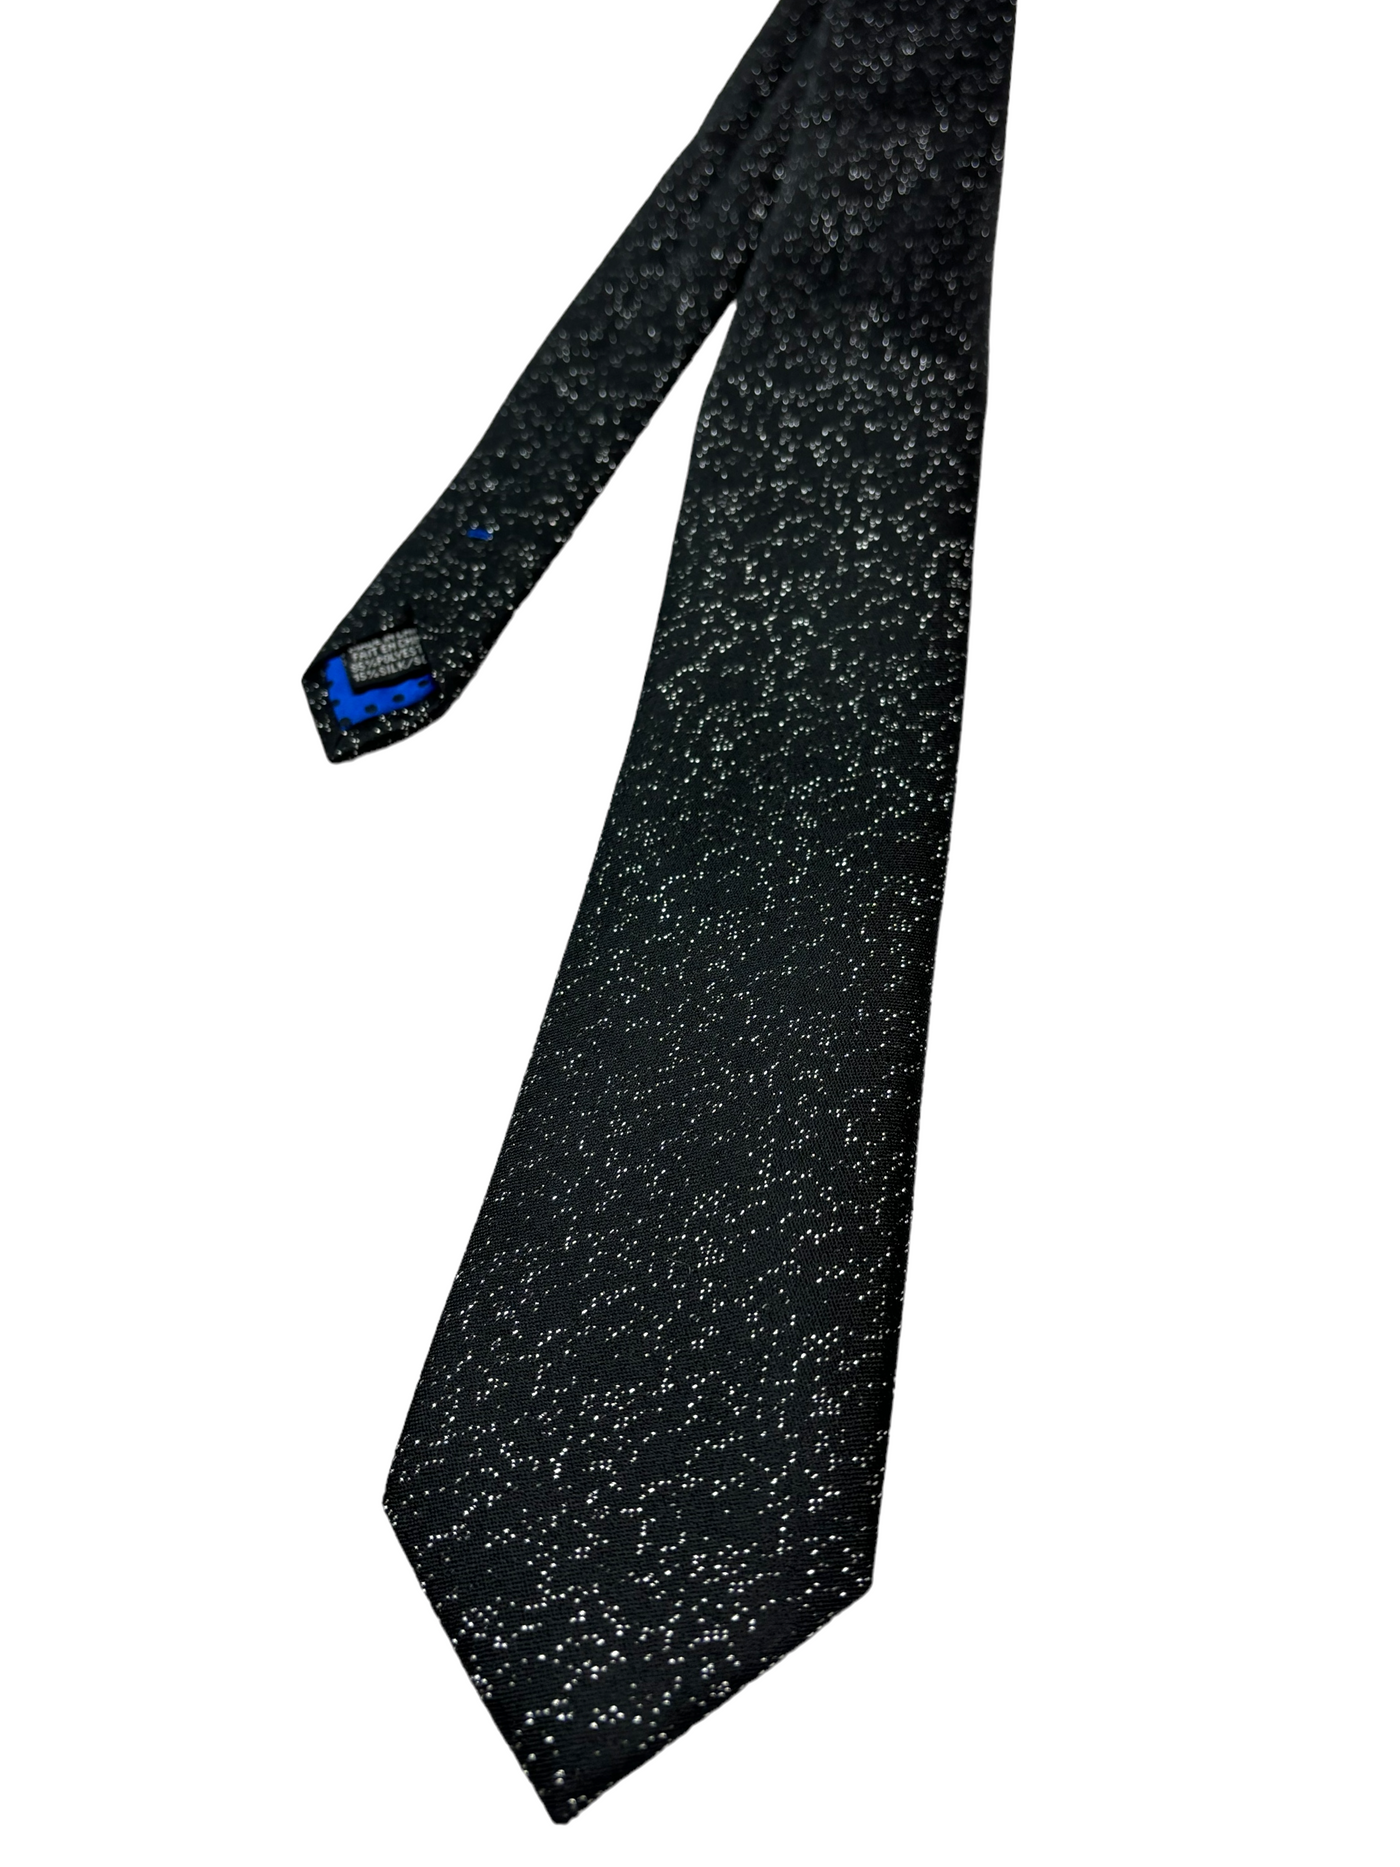 Cravate noire scintillante